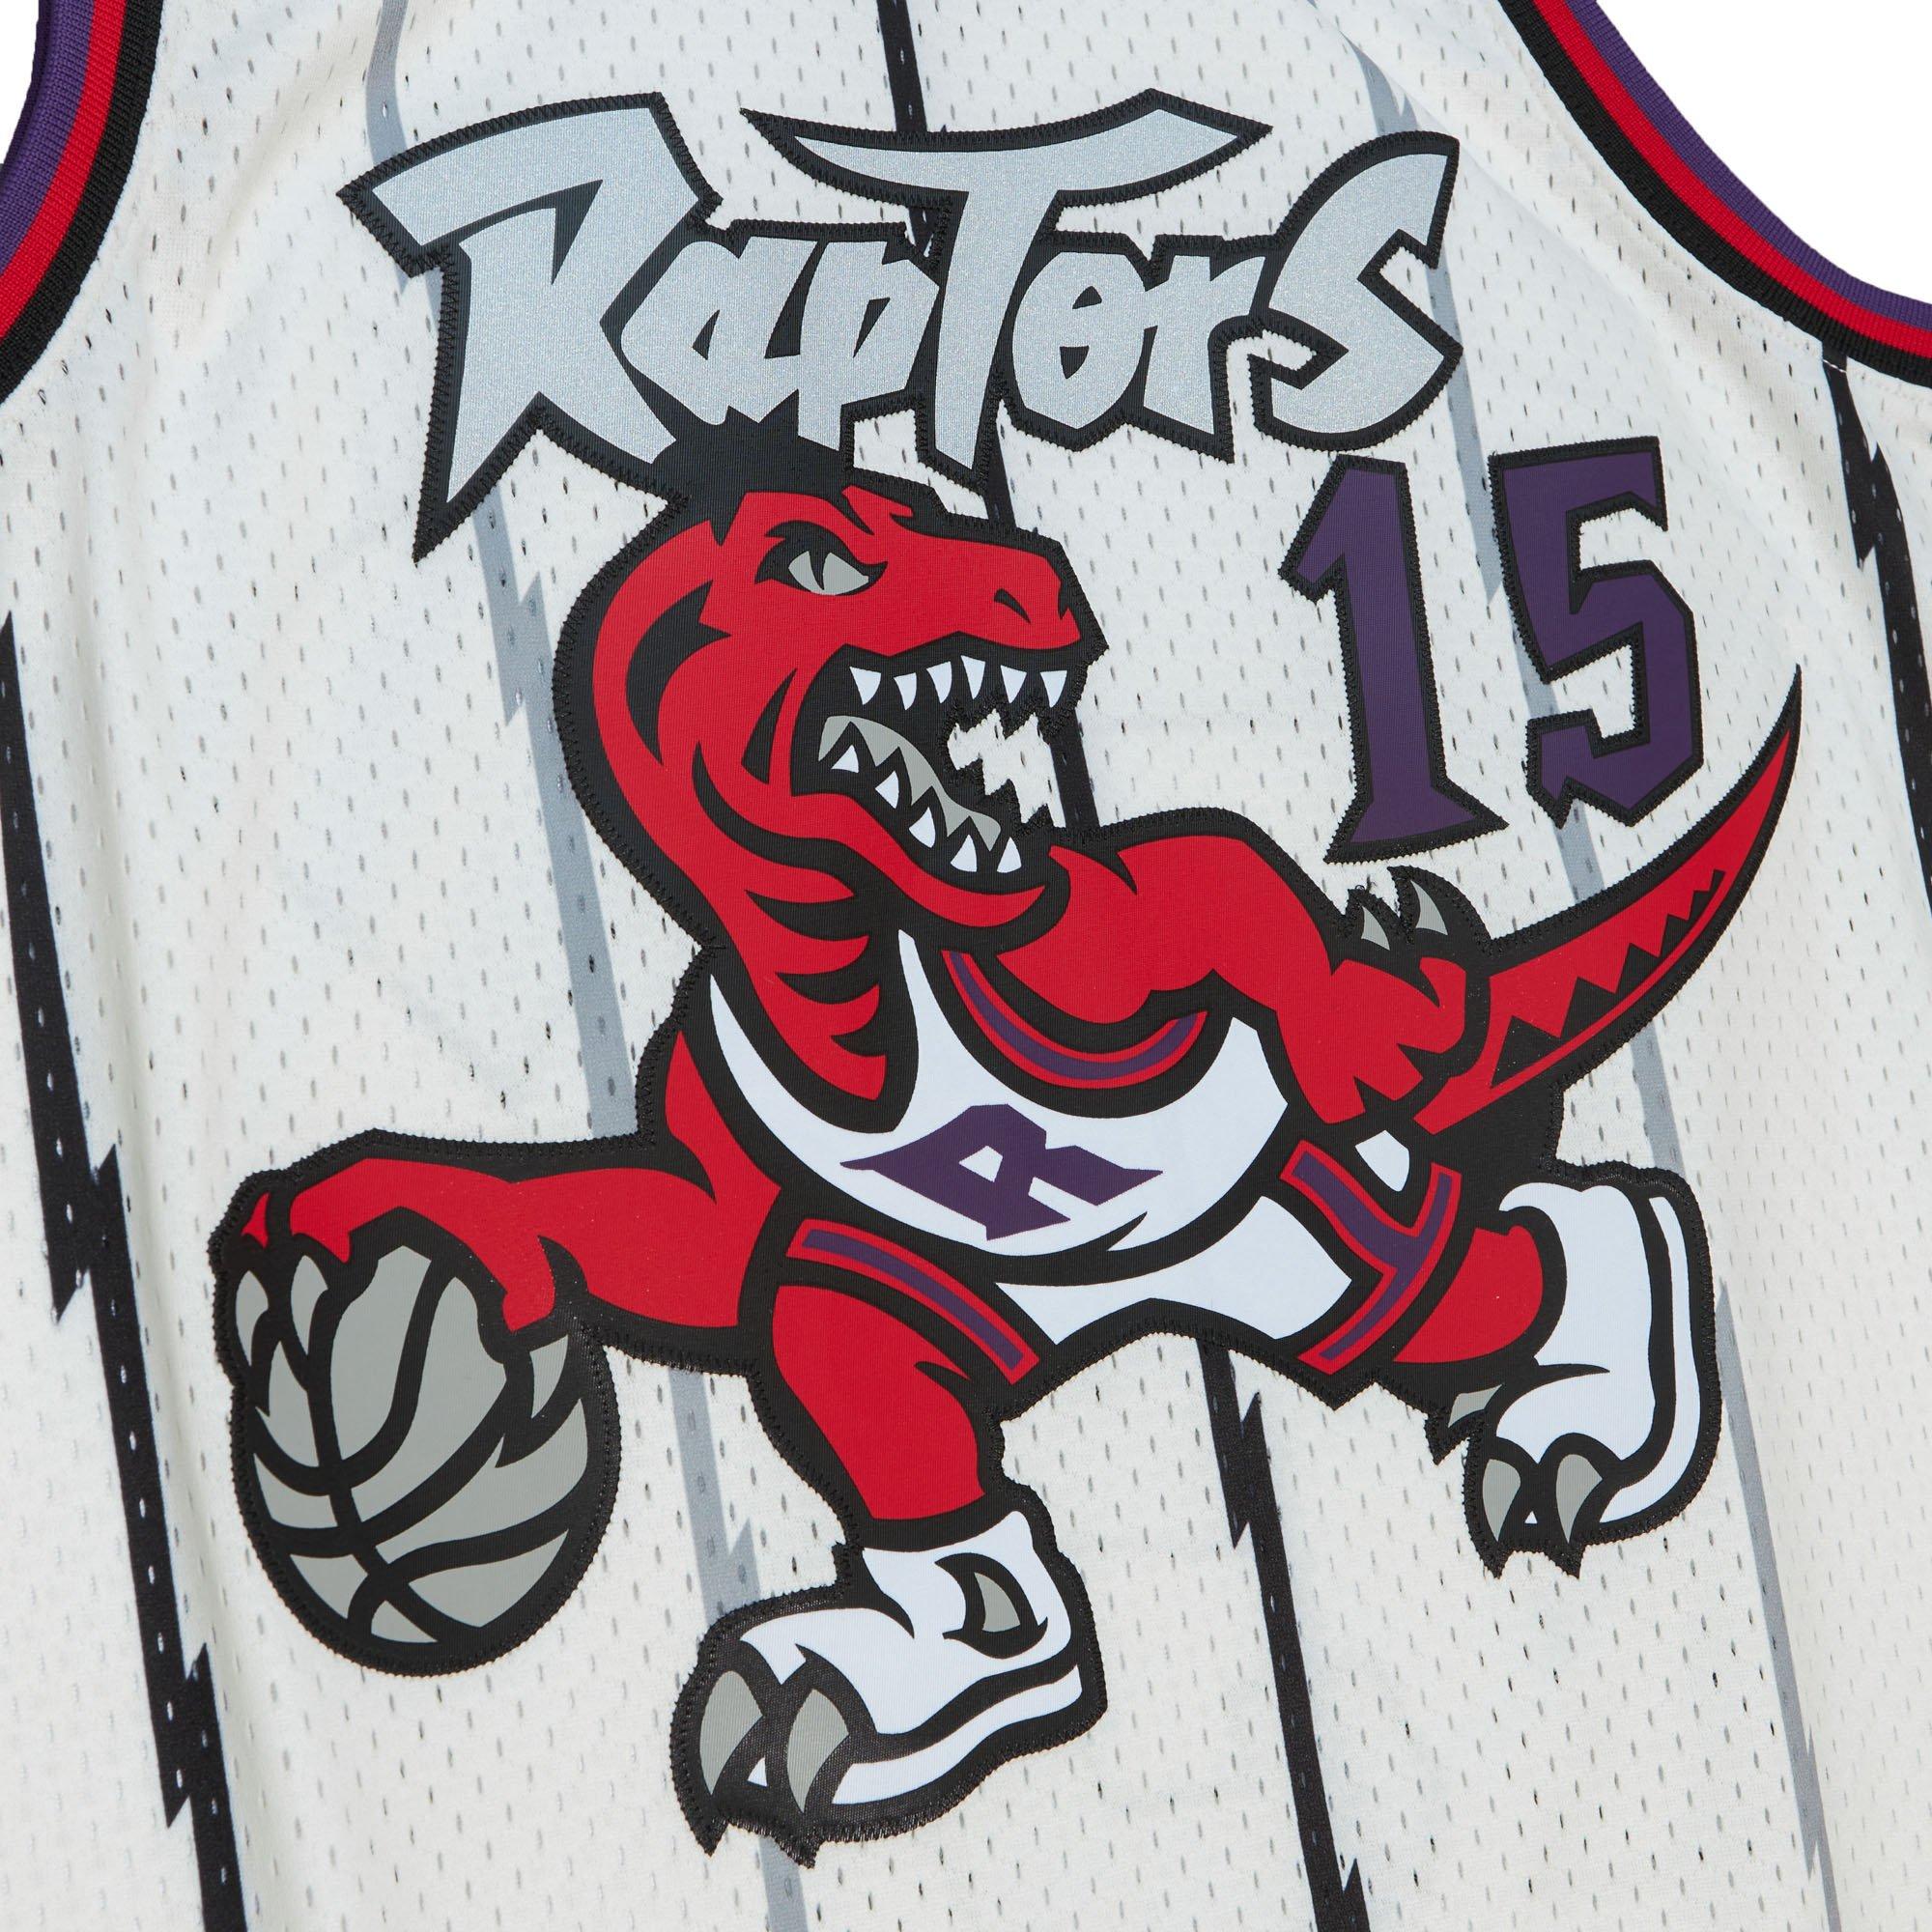 Camiseta Vince Carter swingman con Toronto Raptors ☑️ Baloncesto